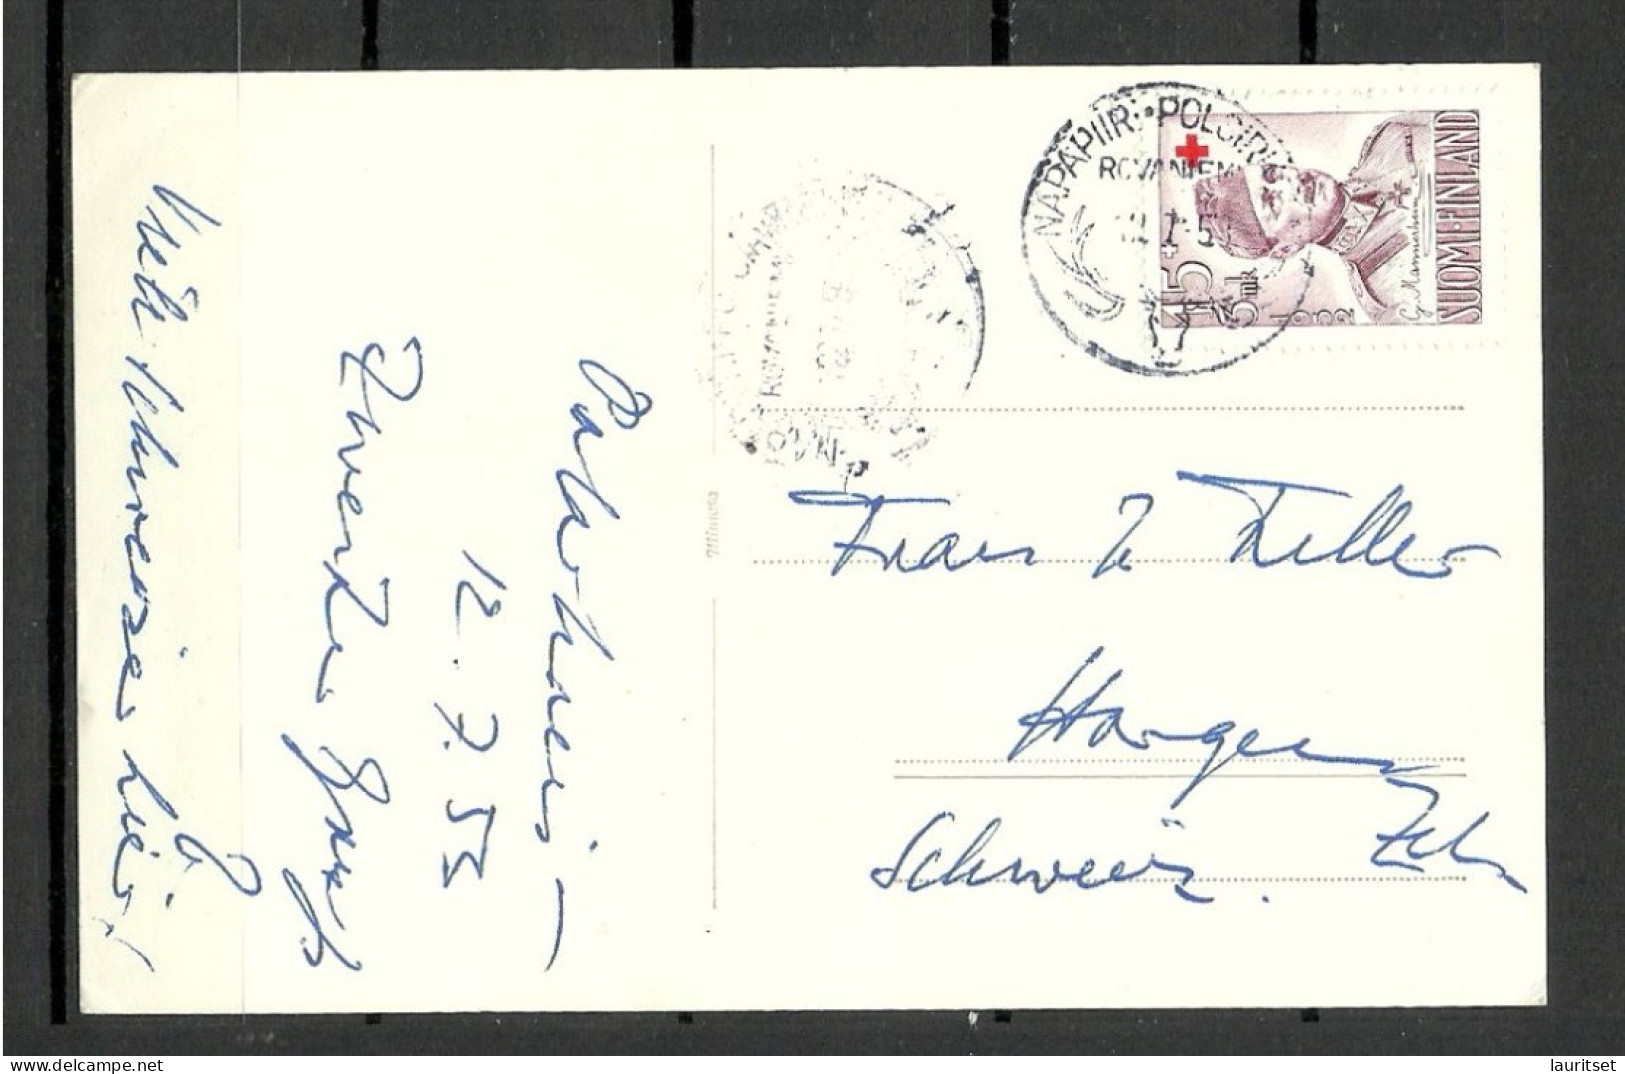 FINNLAND Finland 1953 O Napapiiri Polar Circle Rovaniemi Post Card Sent To Switzerland Michel 408 As Single - Covers & Documents